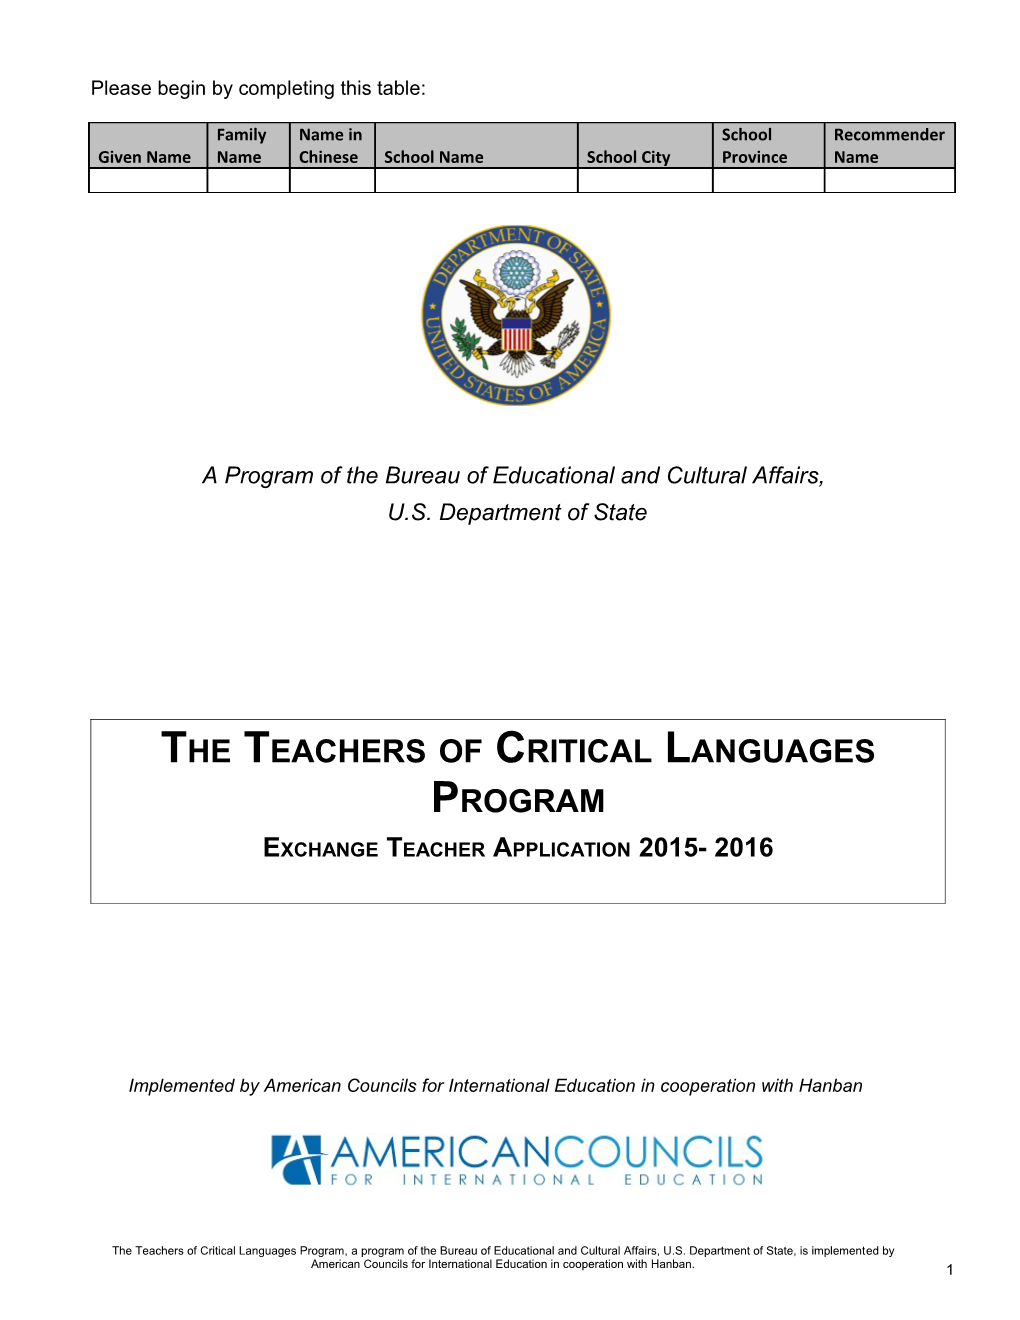 Teachers of Critical Languages Program